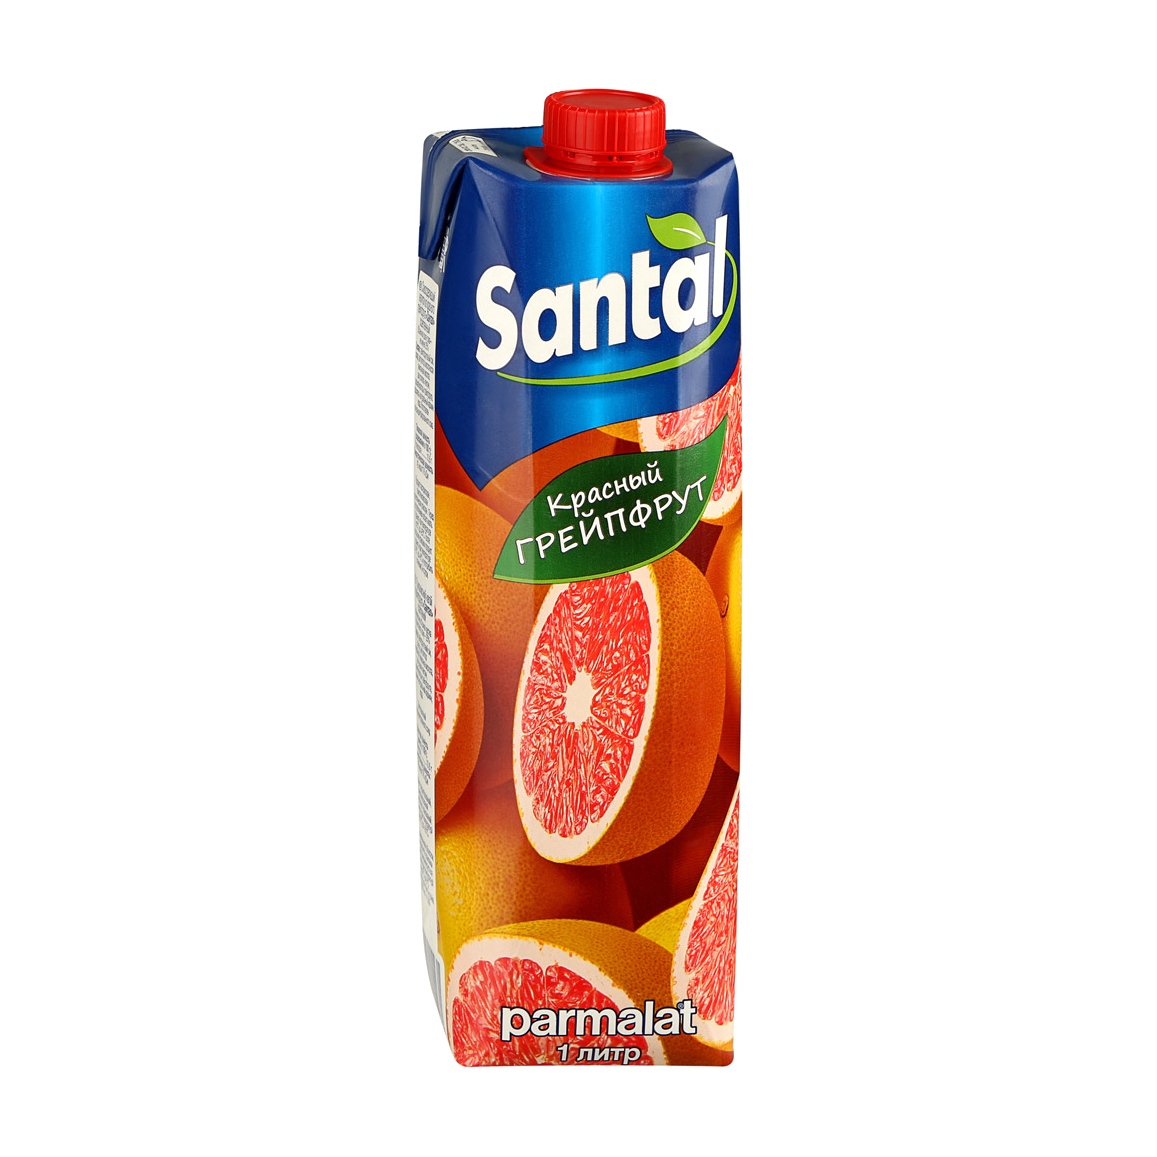 Напиток Santal красный грейпфрут 1 л напиток perrier со вкусом грейпфрута 0 5 литра газ пэт 24 шт в уп